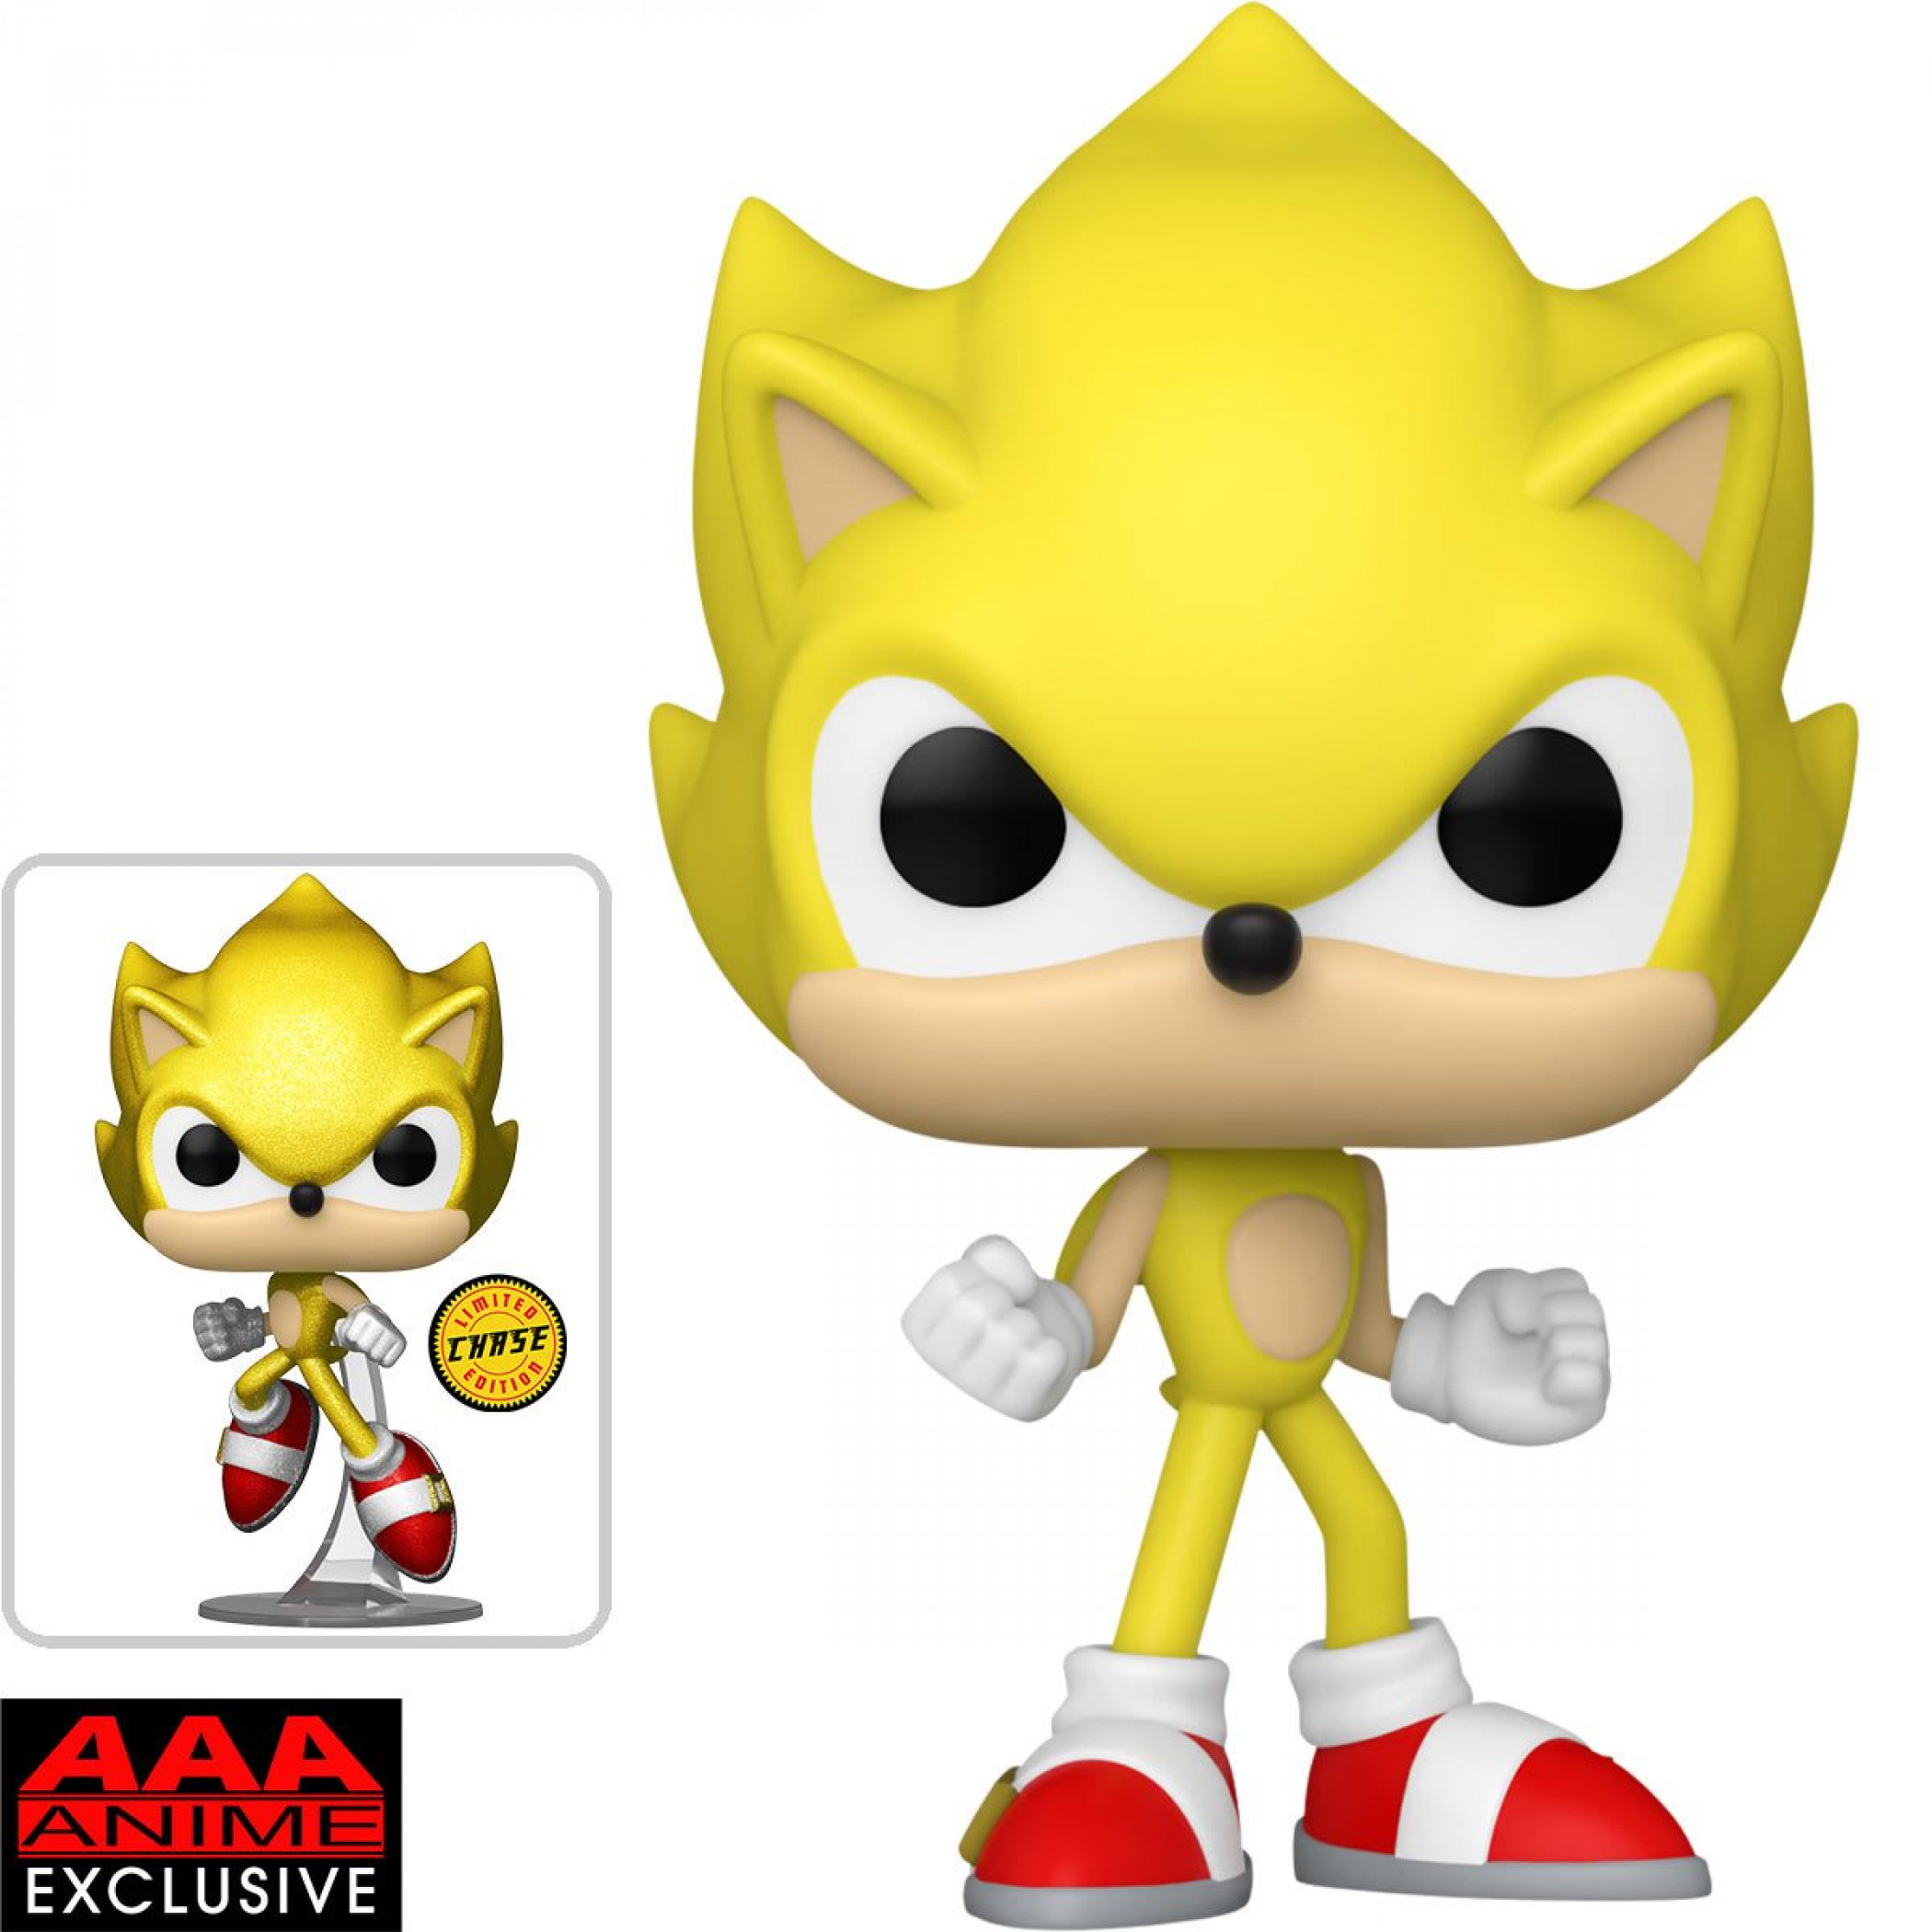 Sonic the Hedgehog Super Sonic Funko Pop! Vinyl Figure